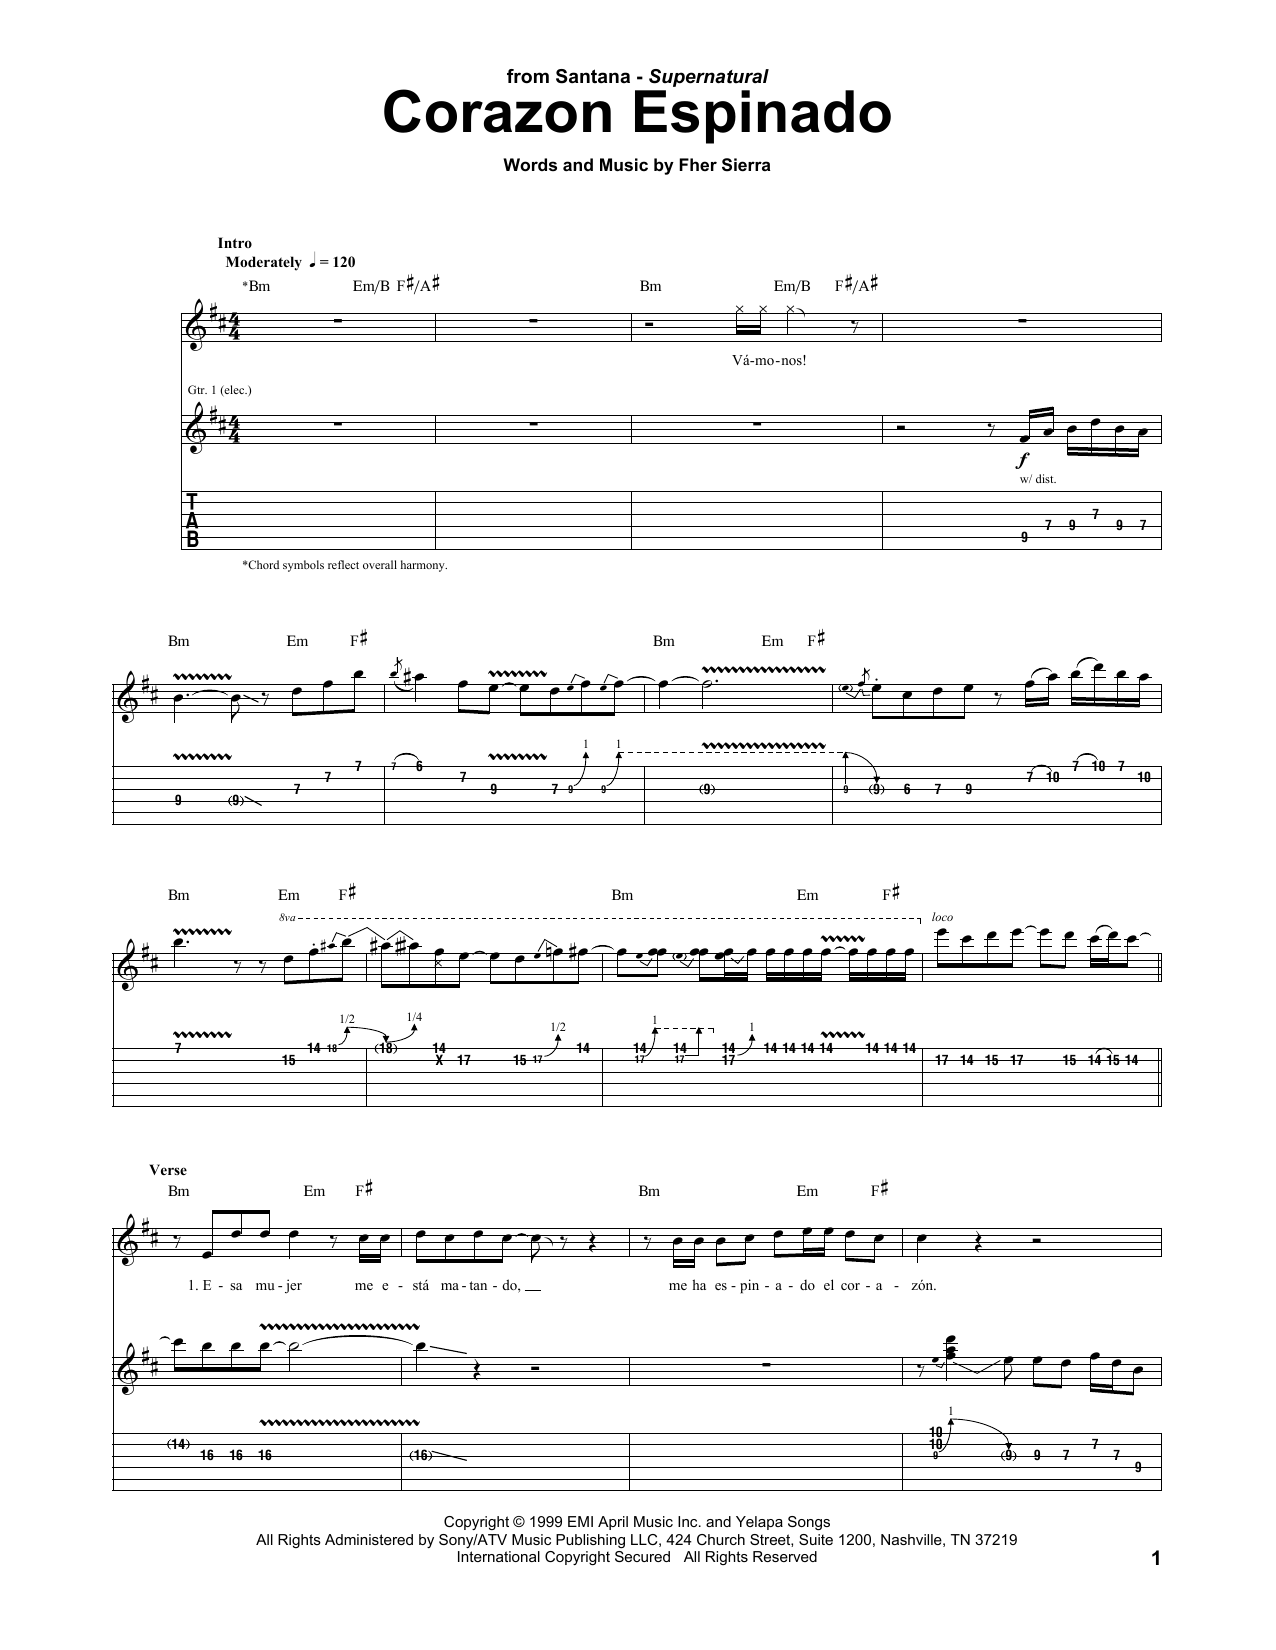 Santana Corazon Espinado Sheet Music Notes & Chords for Easy Guitar Tab - Download or Print PDF